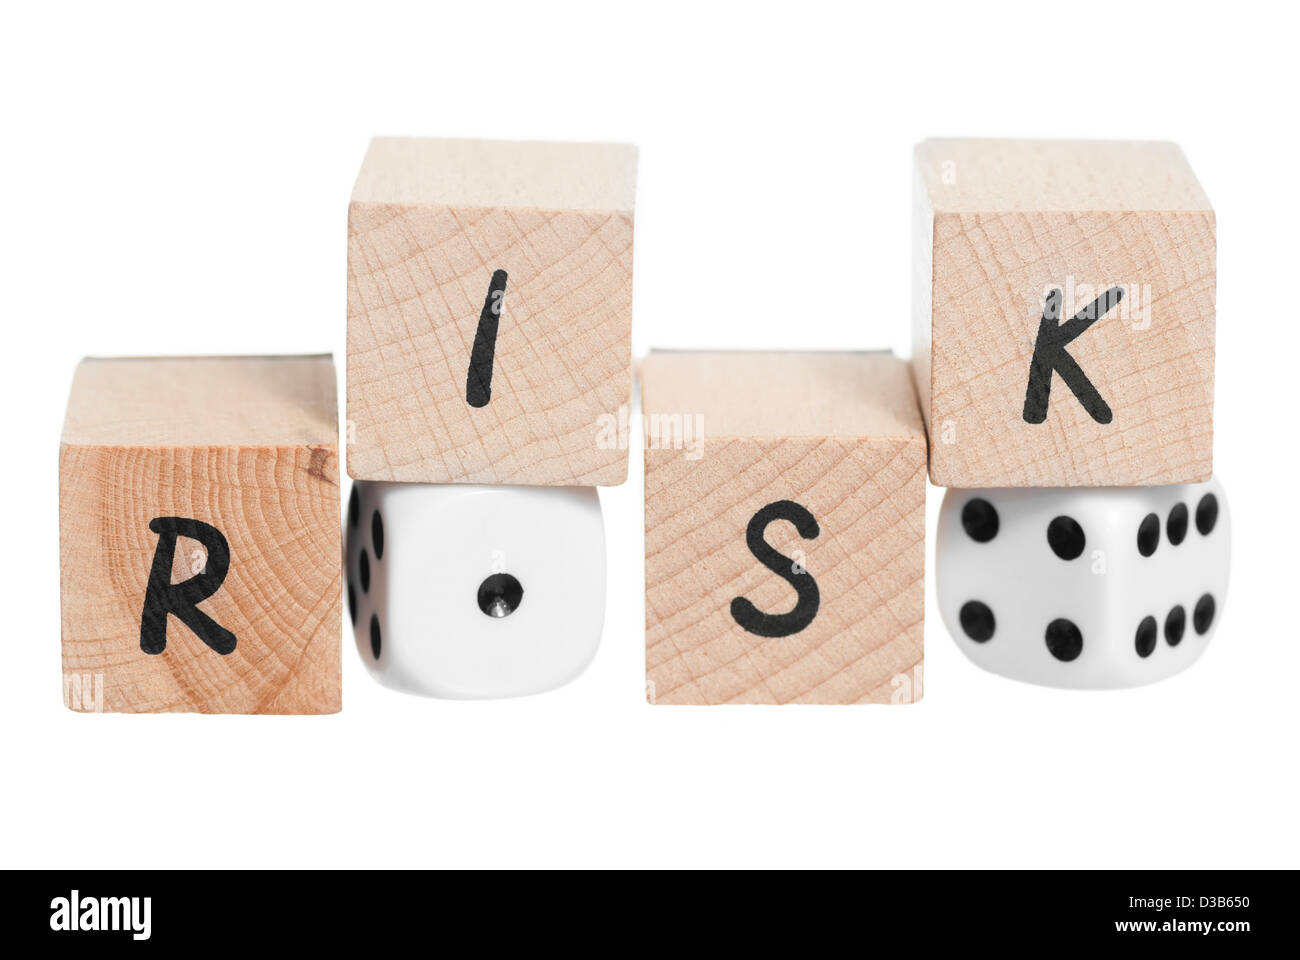 Risk spelt with wooden blocks. White background. Stock Photo